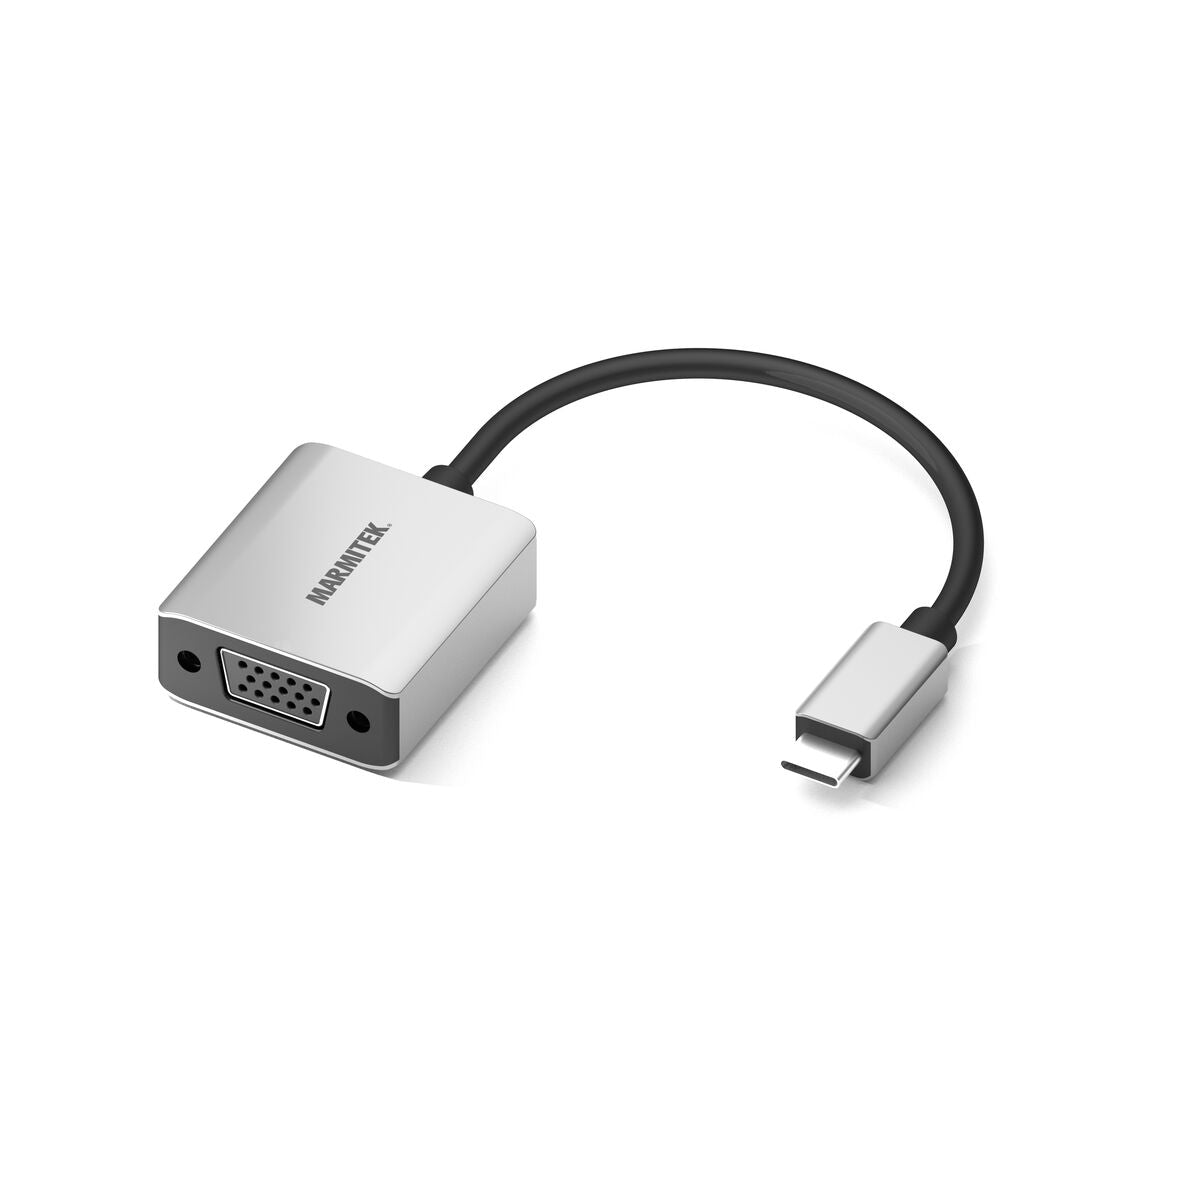 Acheter un adaptateur USB-C vers VGA ?